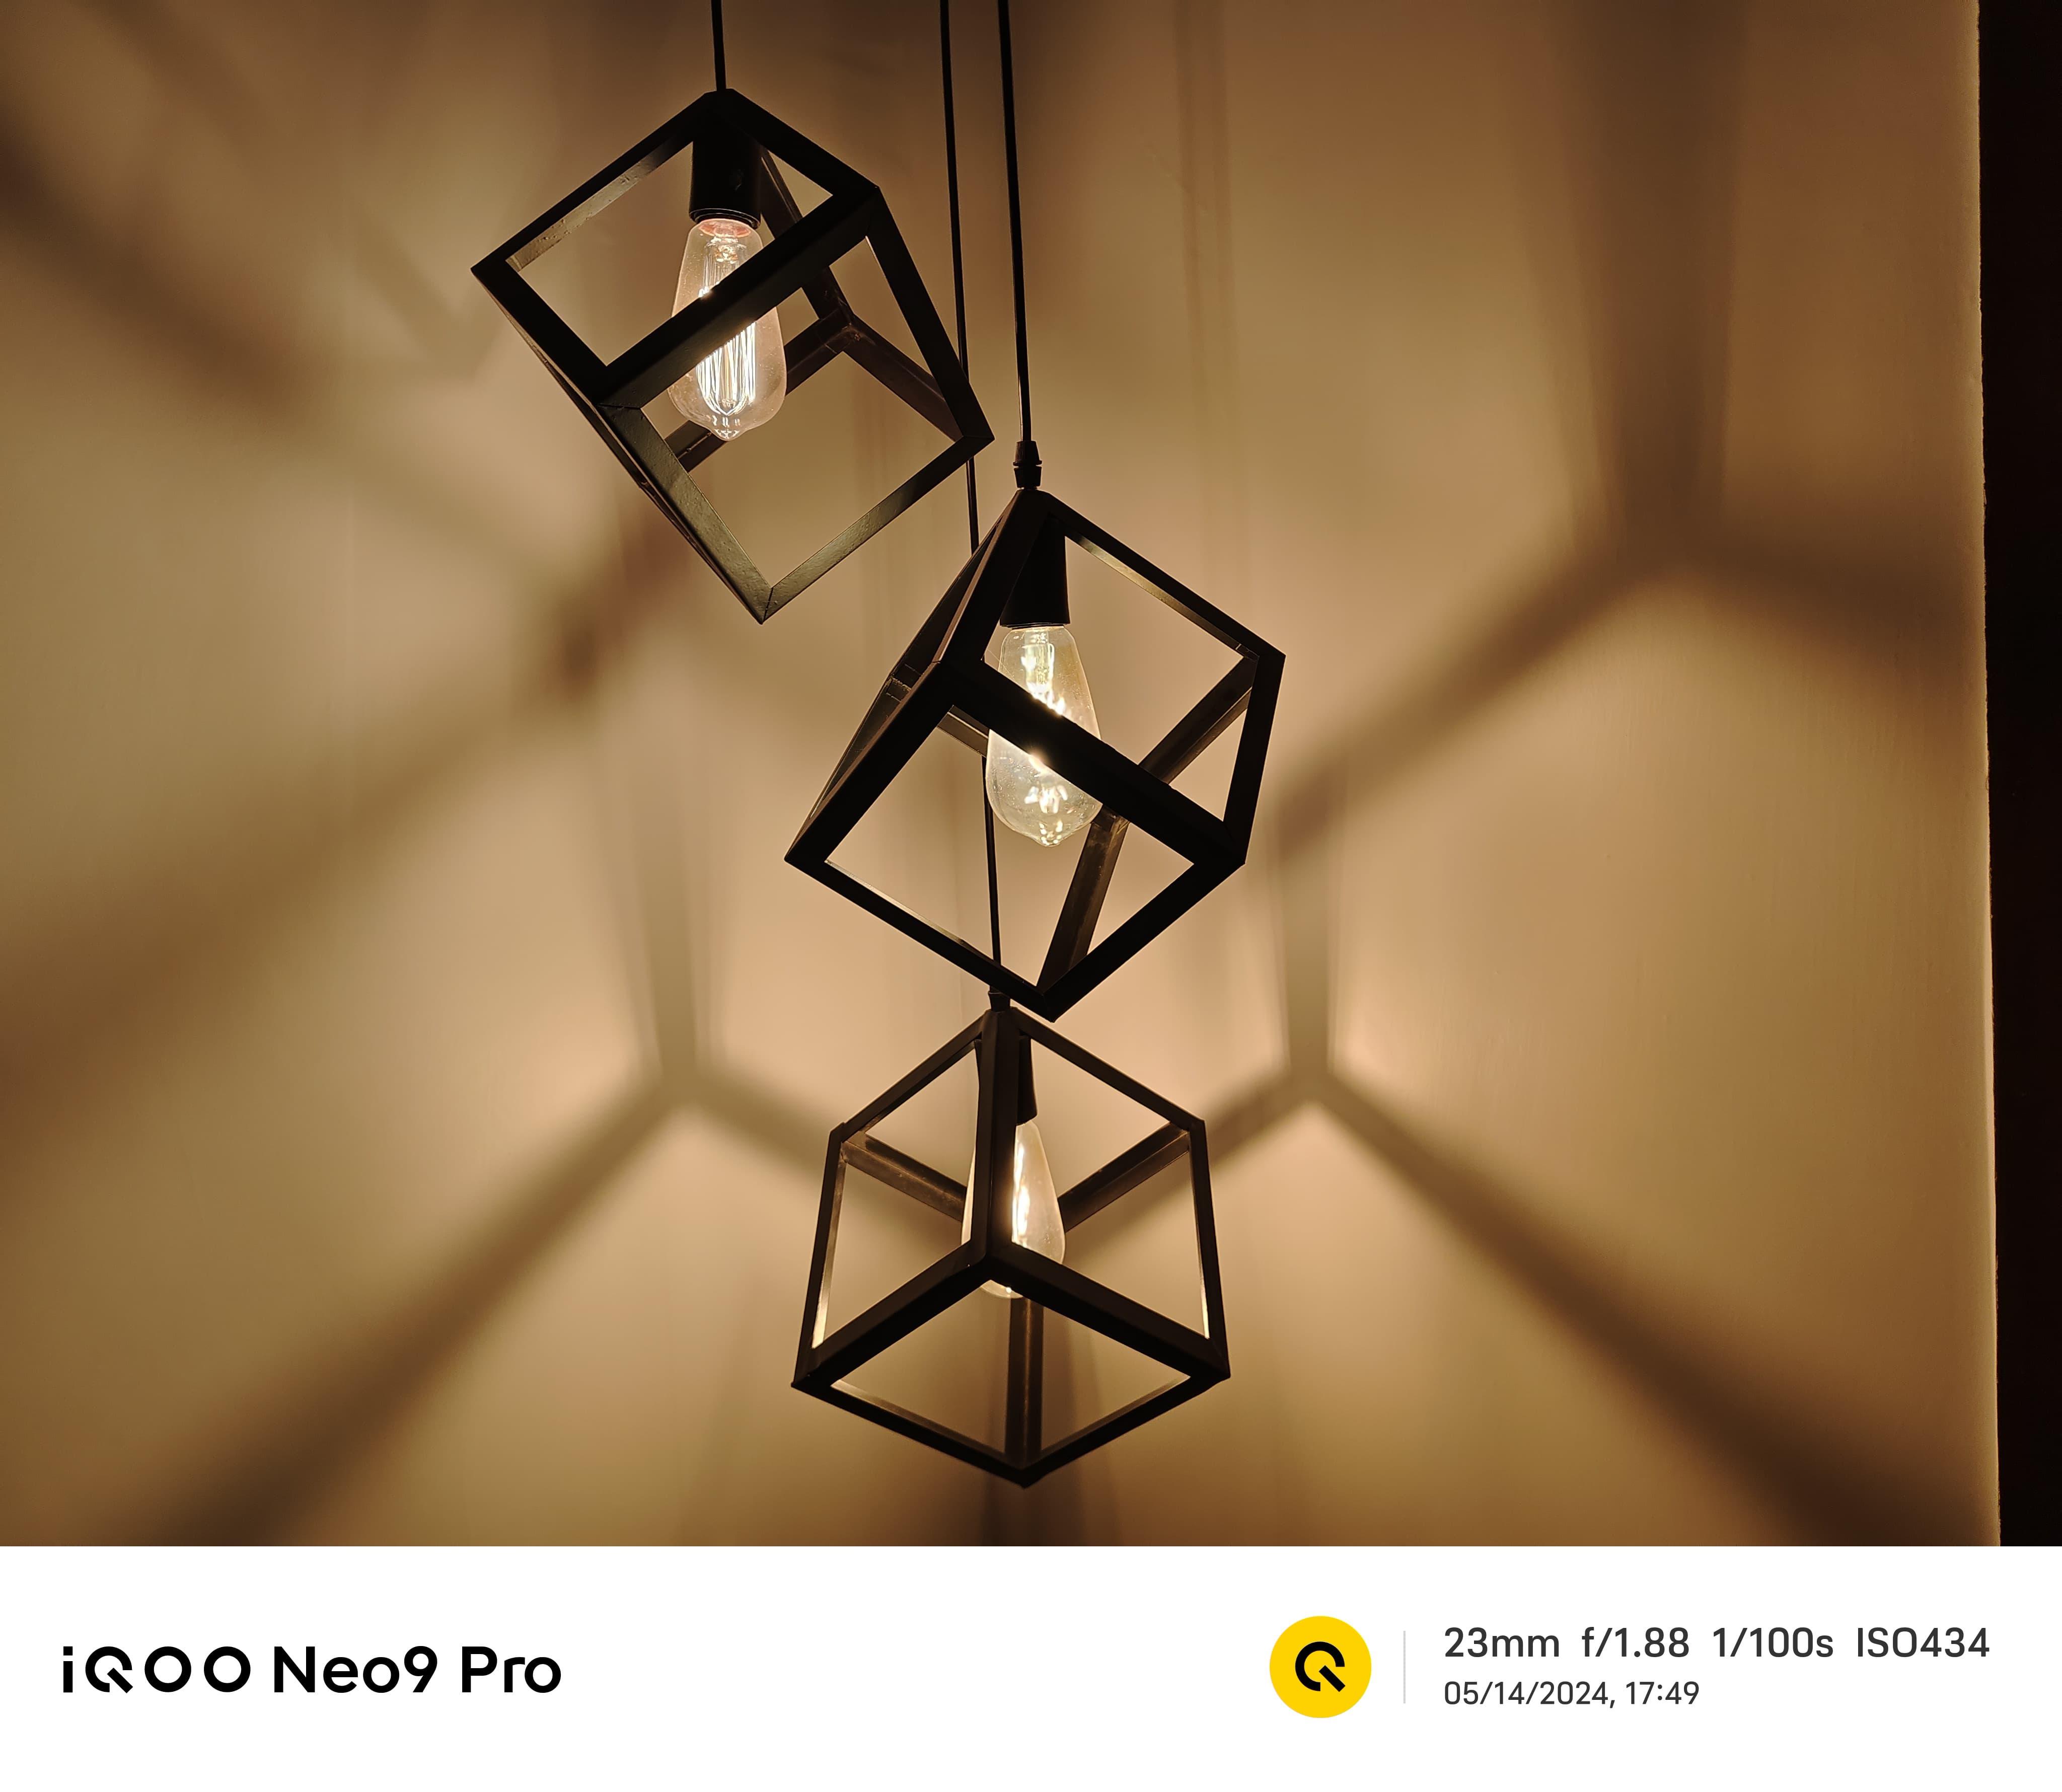 iQOO Neo 9 Pro Review